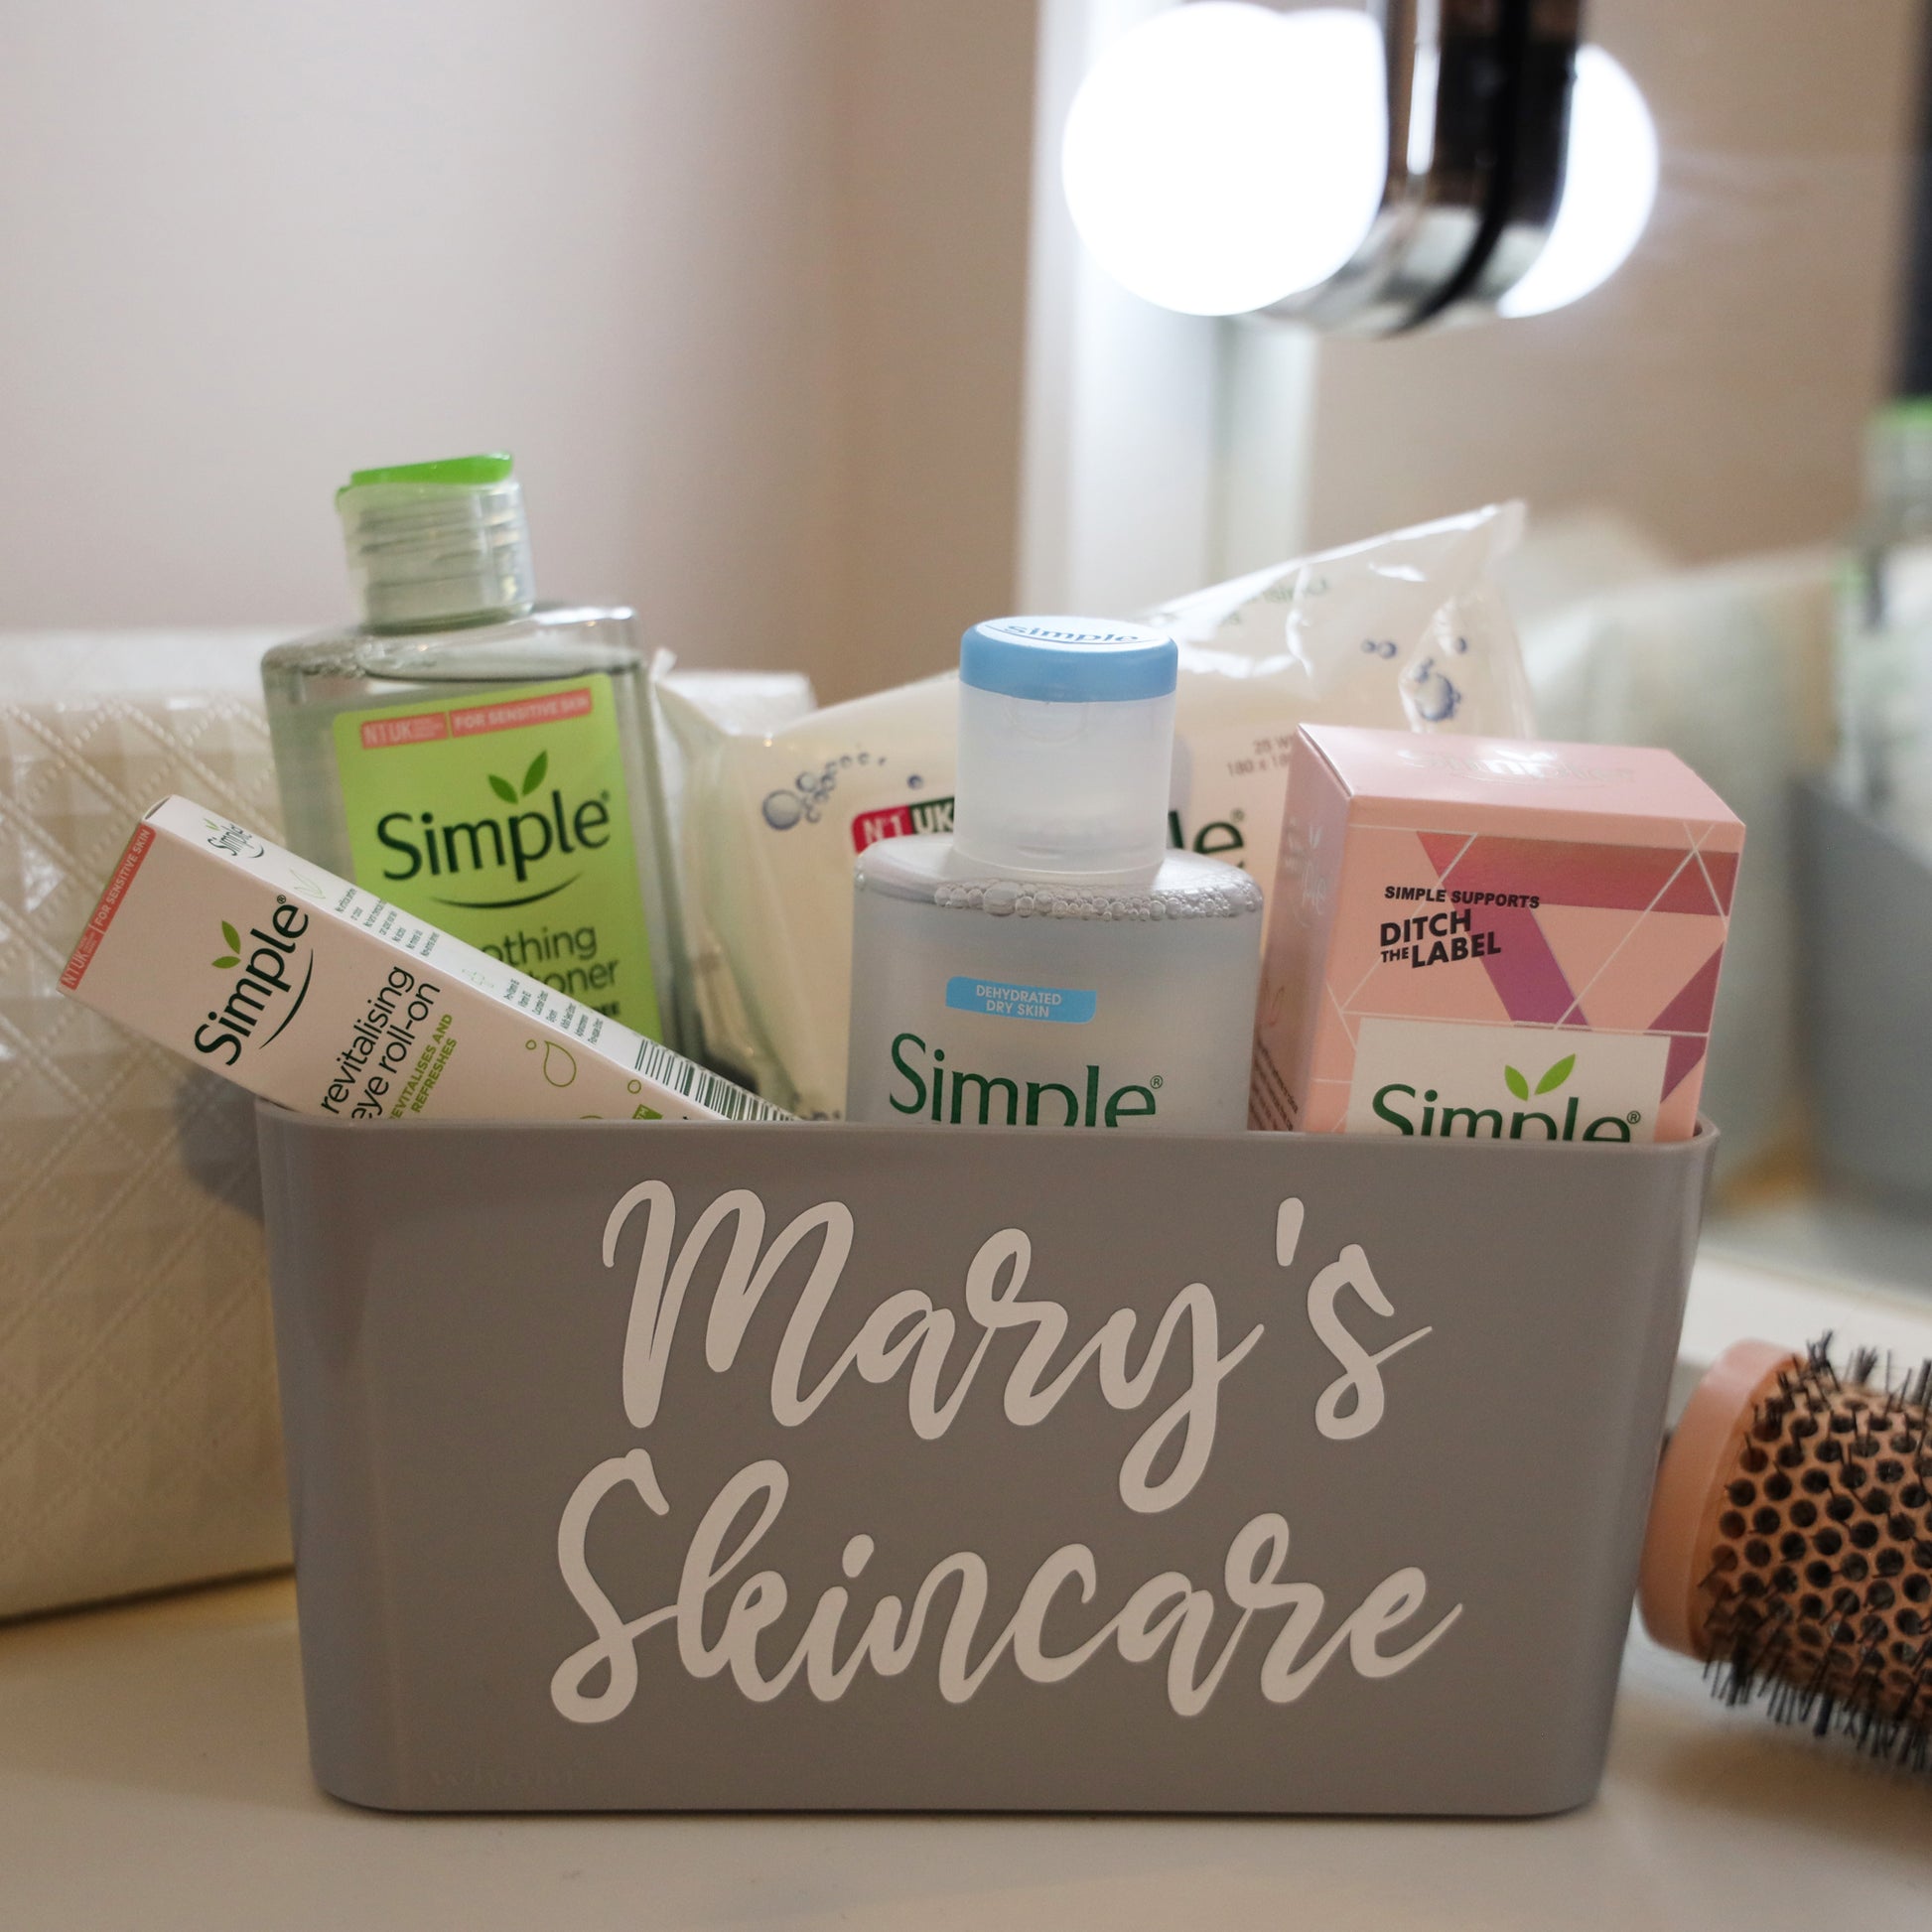 Simple Skincare Filled Personalised Storage Gift Box  - Always Looking Good -   